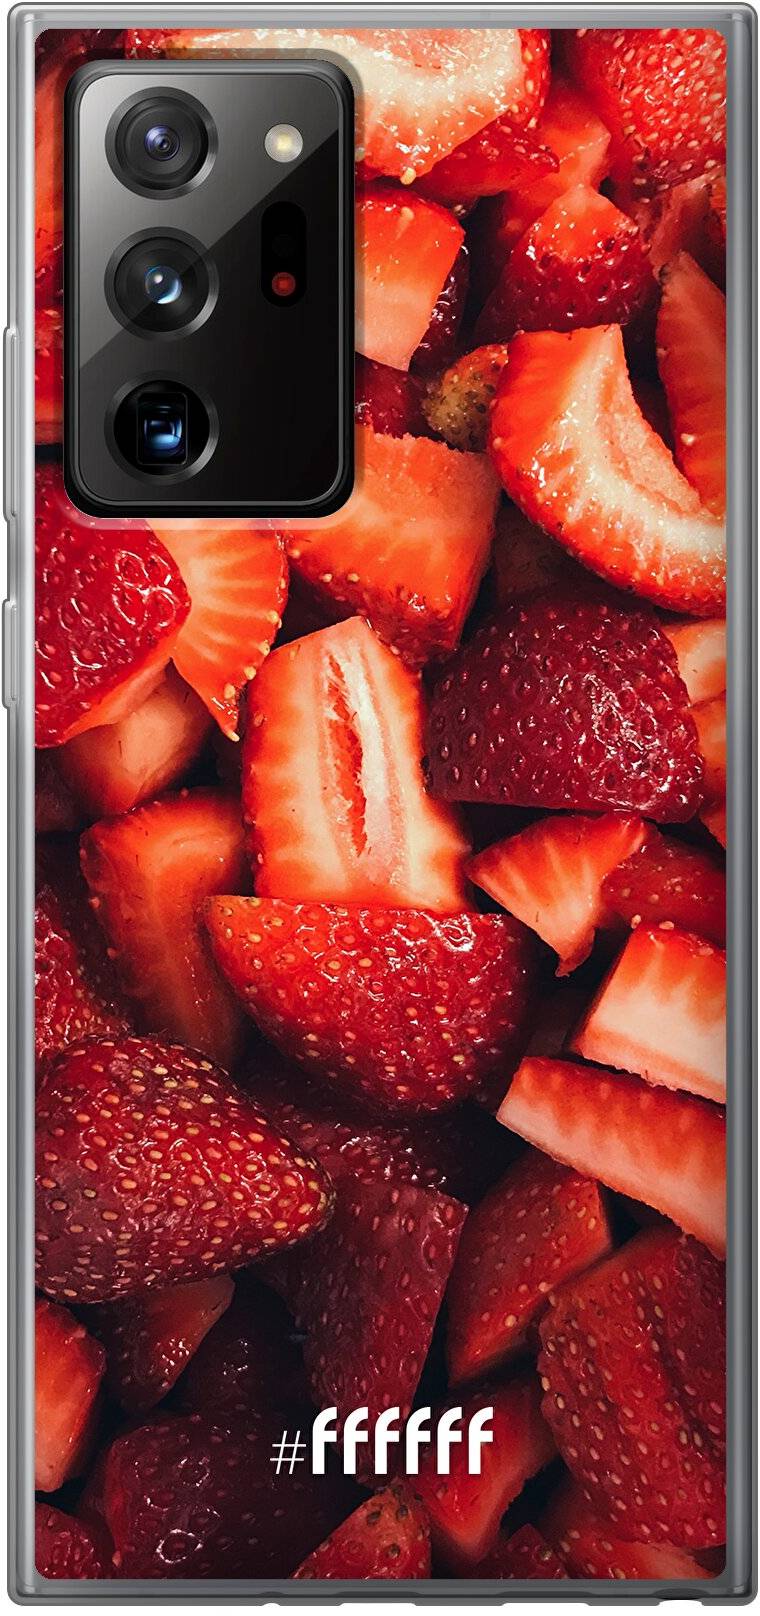 Strawberry Fields Galaxy Note 20 Ultra